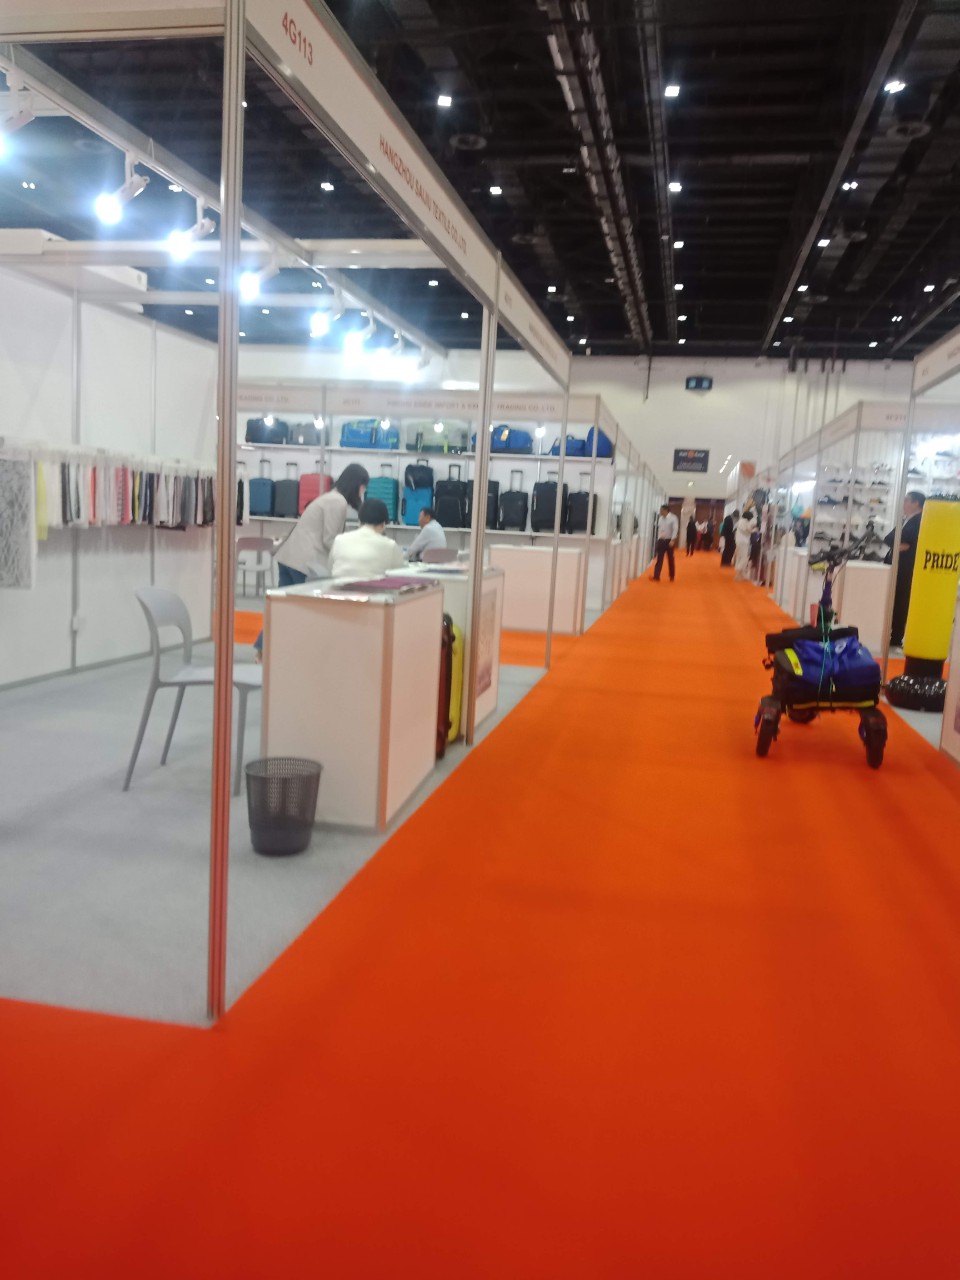 Hội chợ triễn lãm 2019 tại Dubai - 01